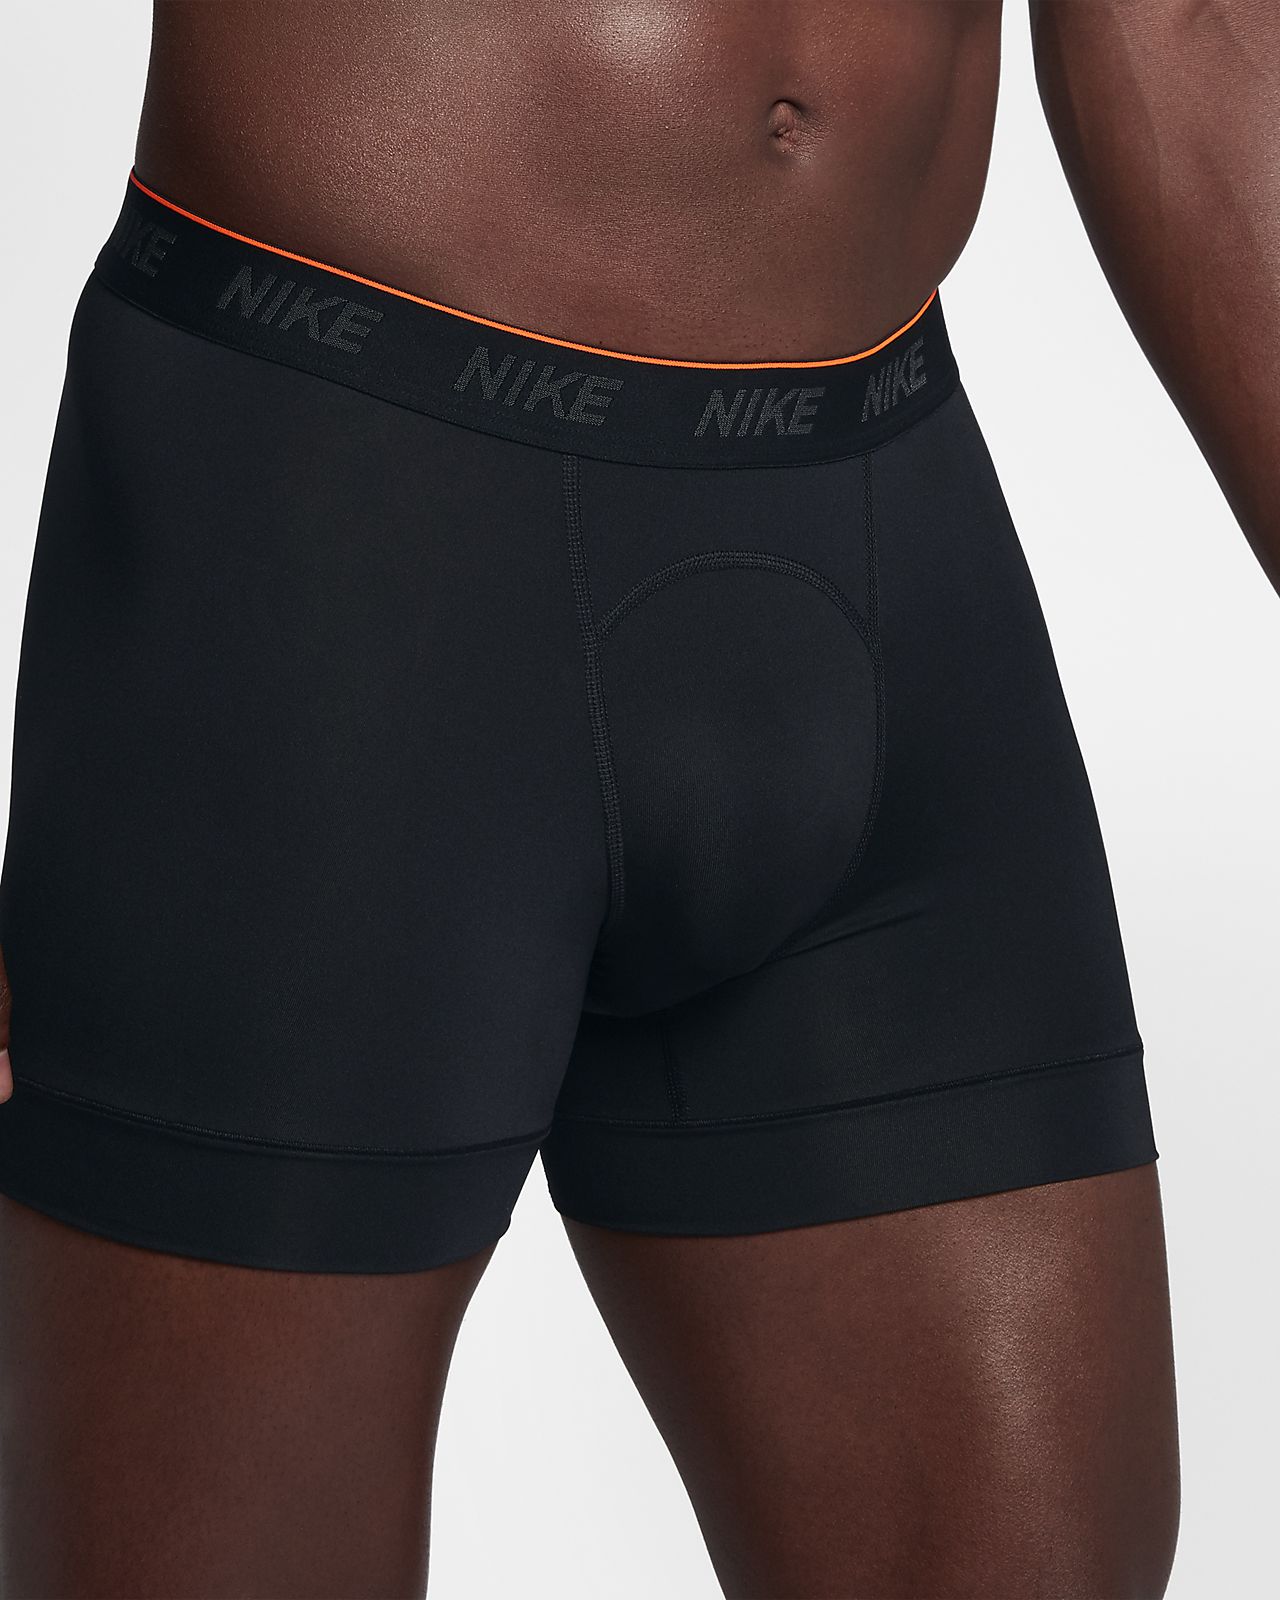 nike compression boxers